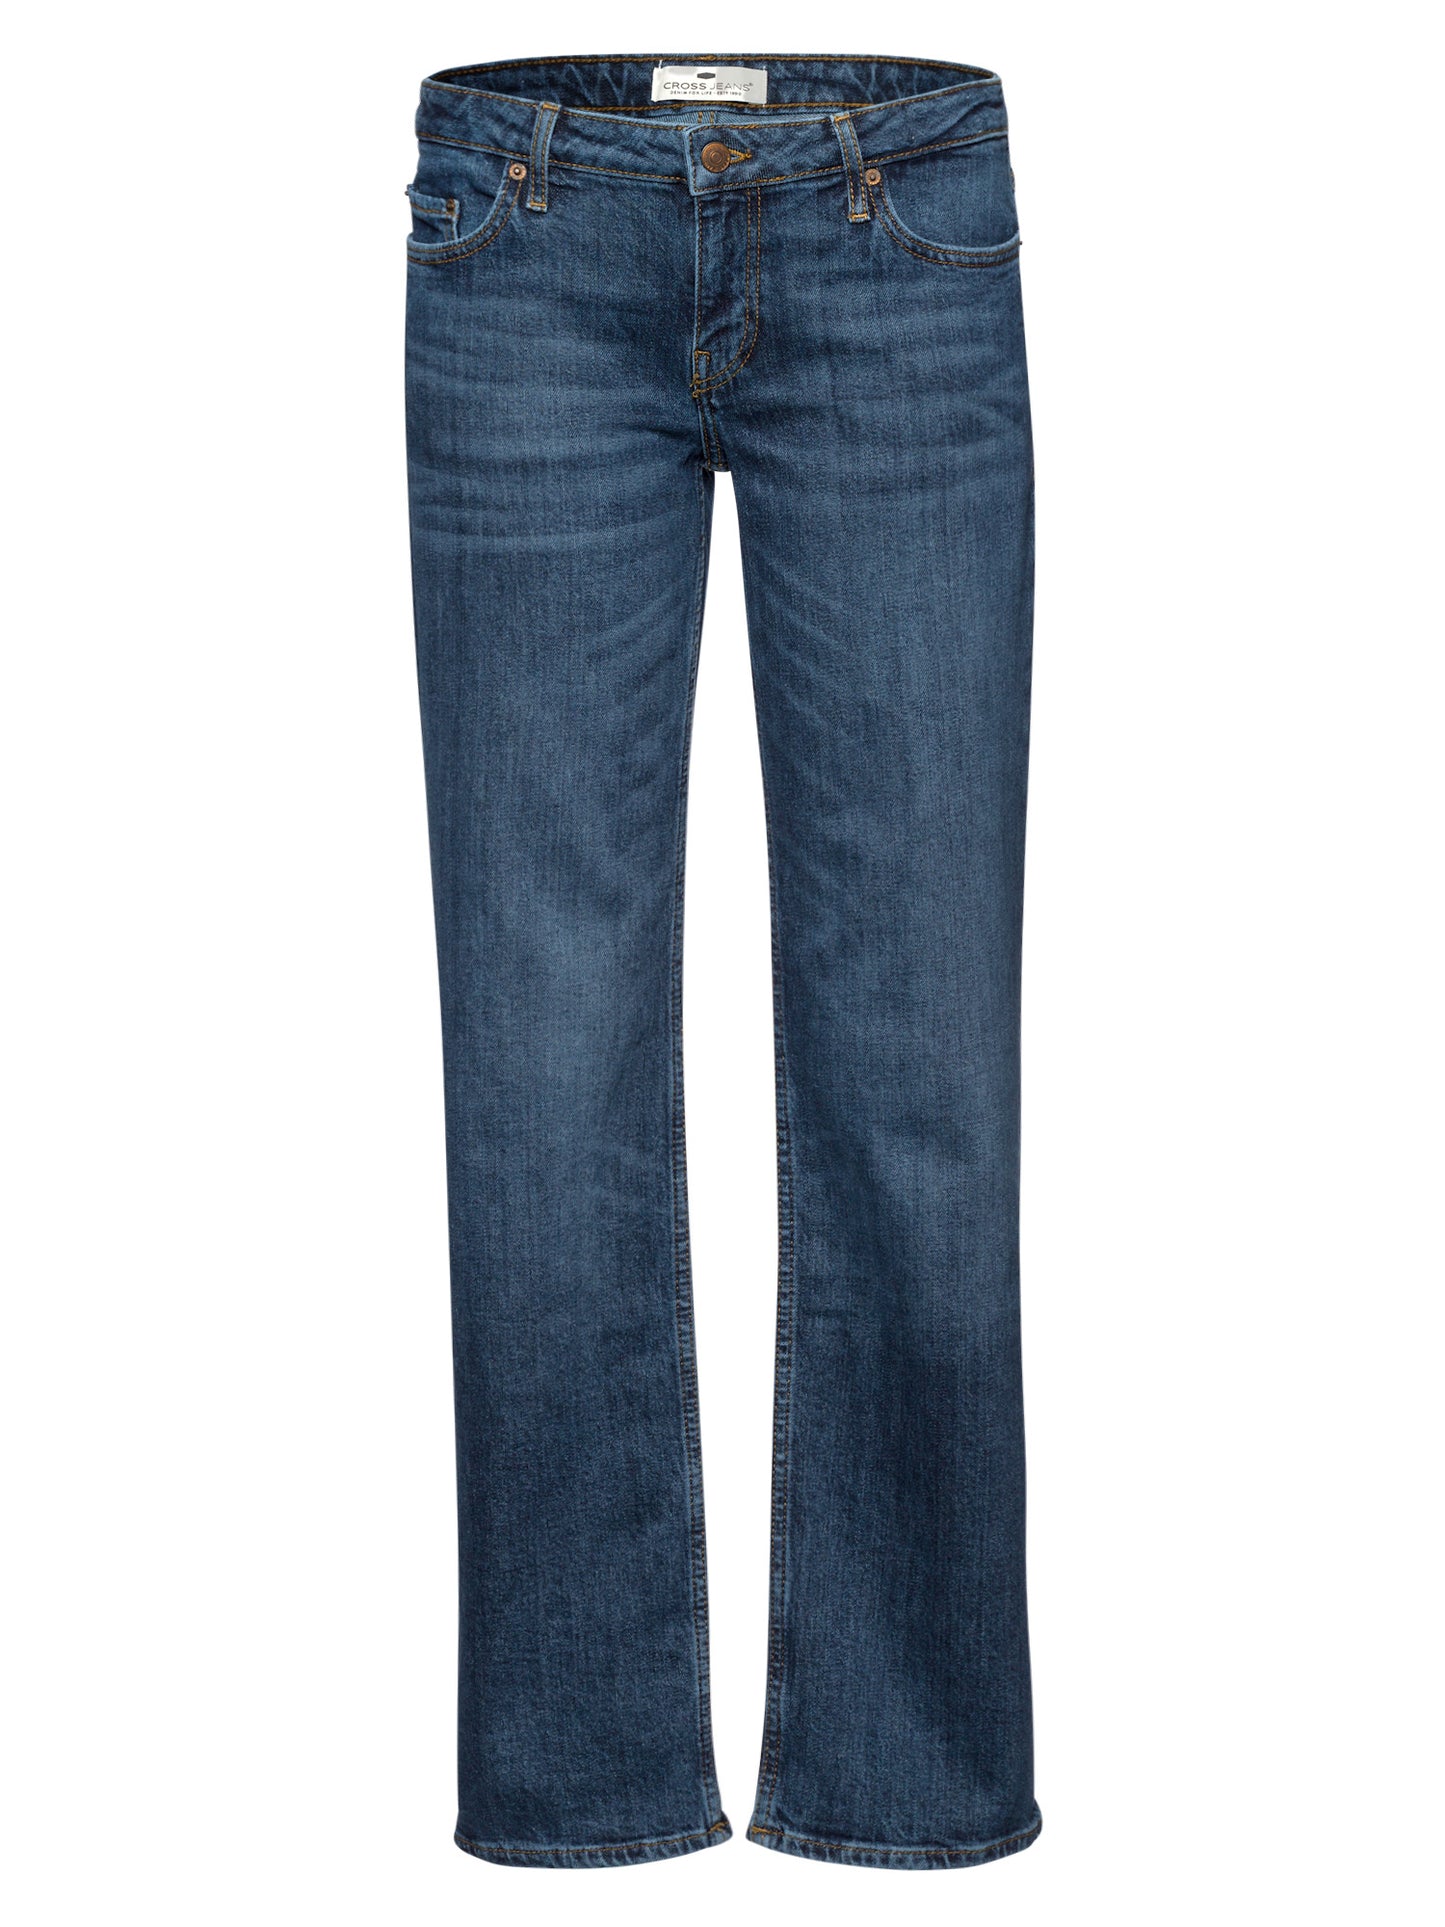 Lily Damen Jeans Straight Fit Low Waist dunkelblau.